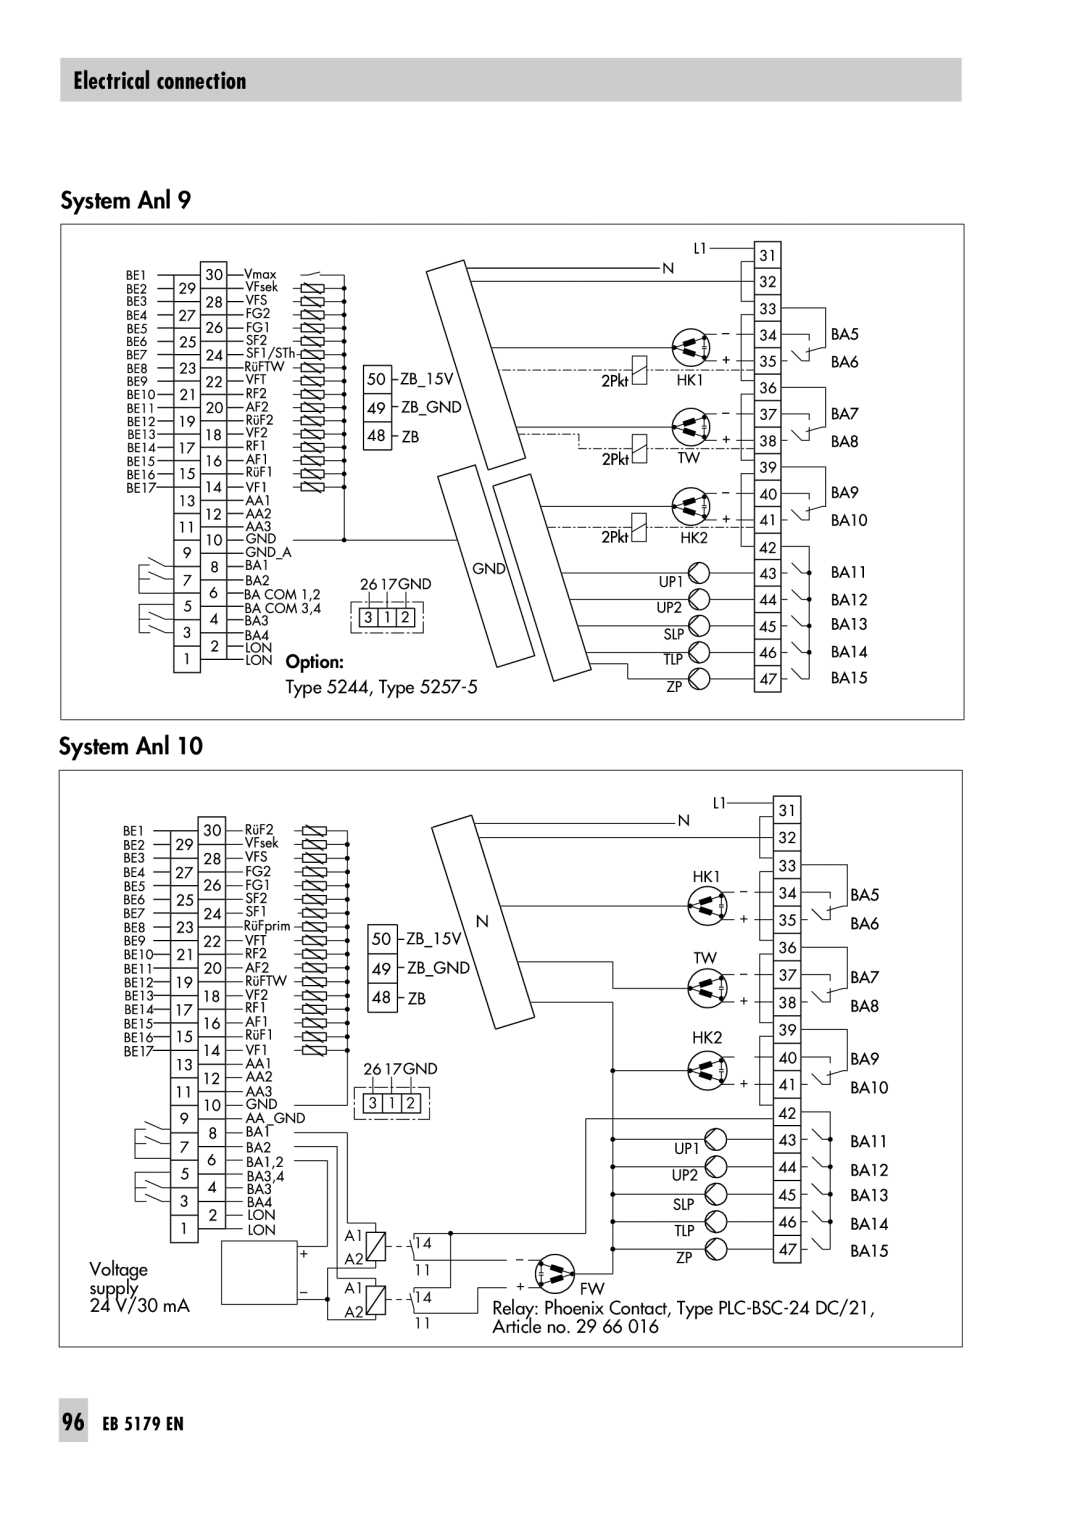 Samson 5100 Electrical connection, Option, Voltage supply 24 V/30 mA, Article no. 29 66, 96EB 5179 EN 